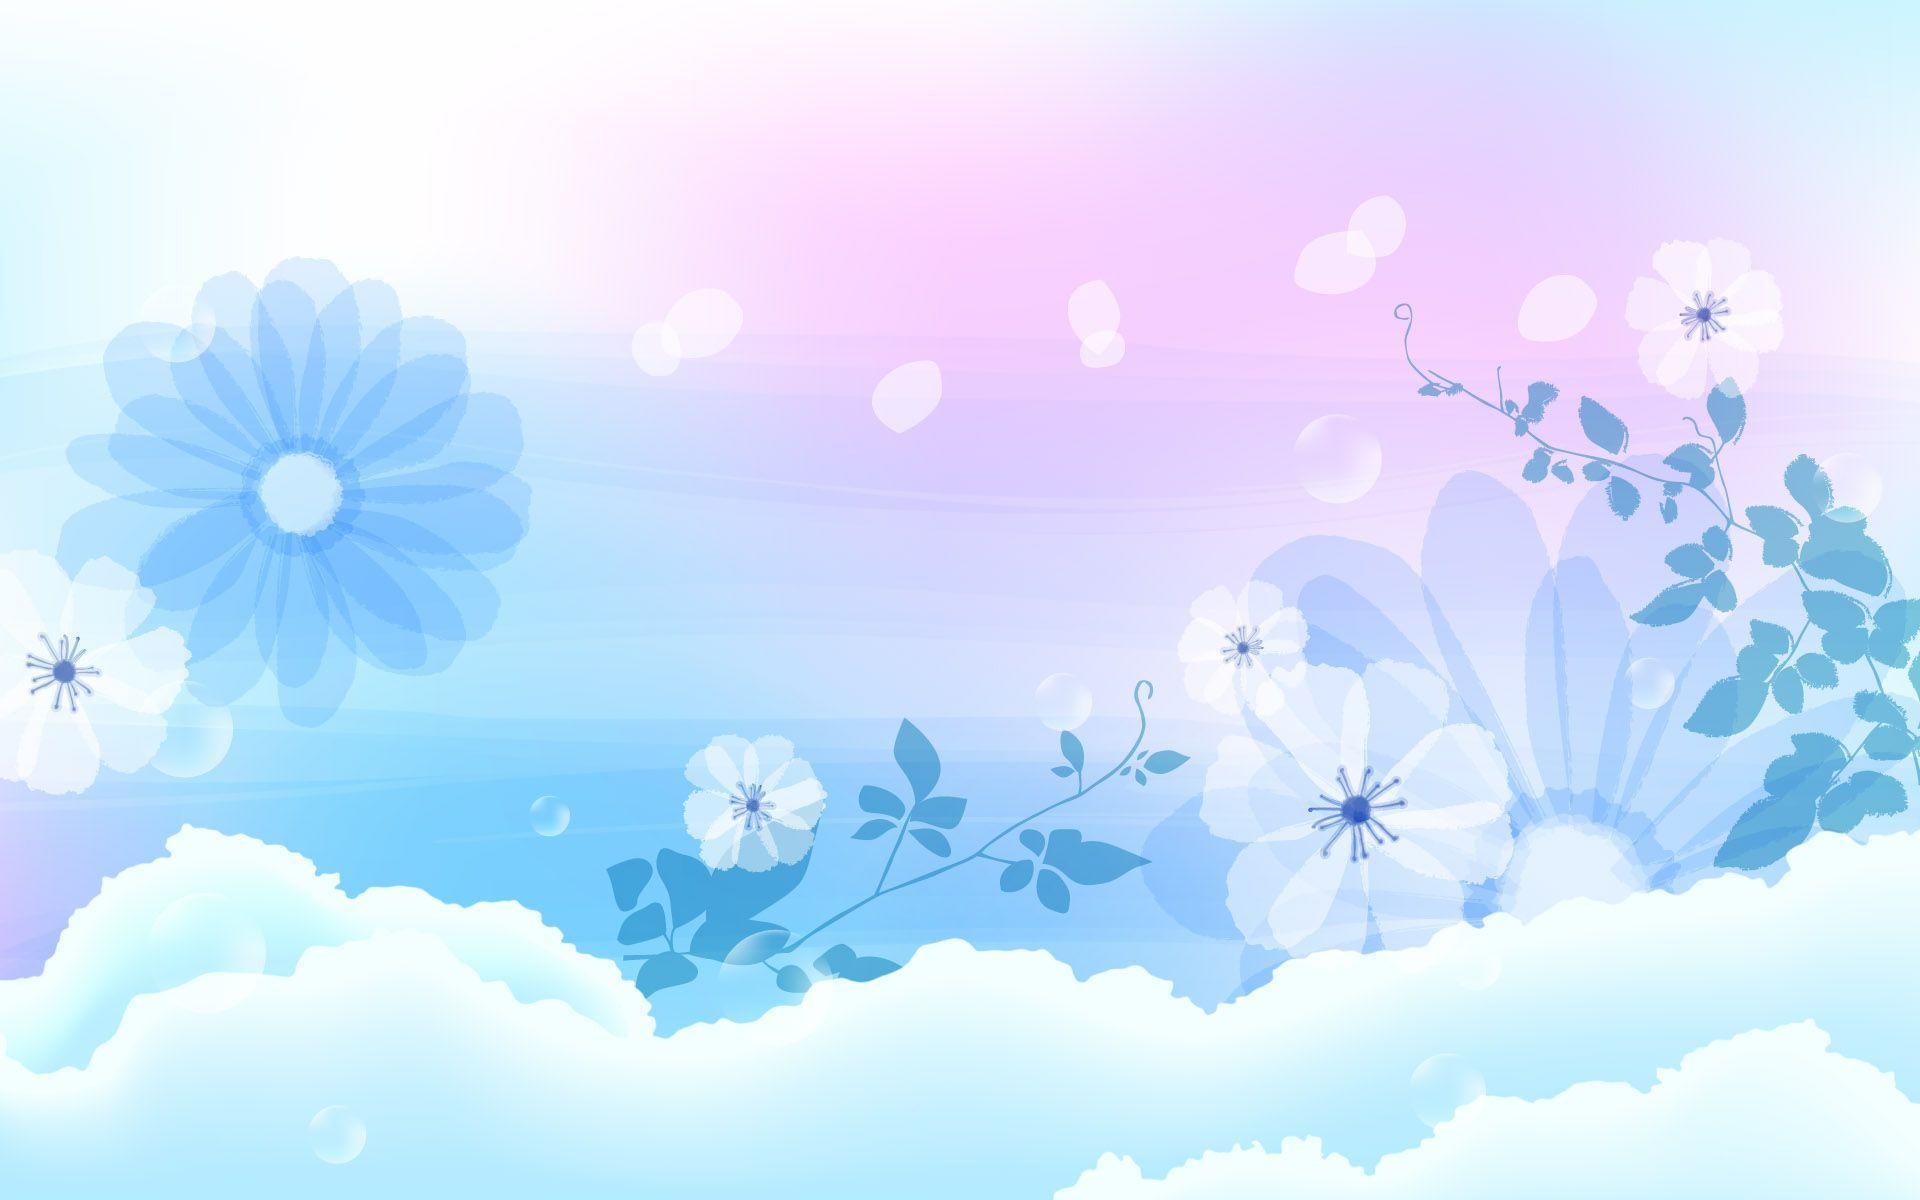 flower background design image. free download the wallpaper